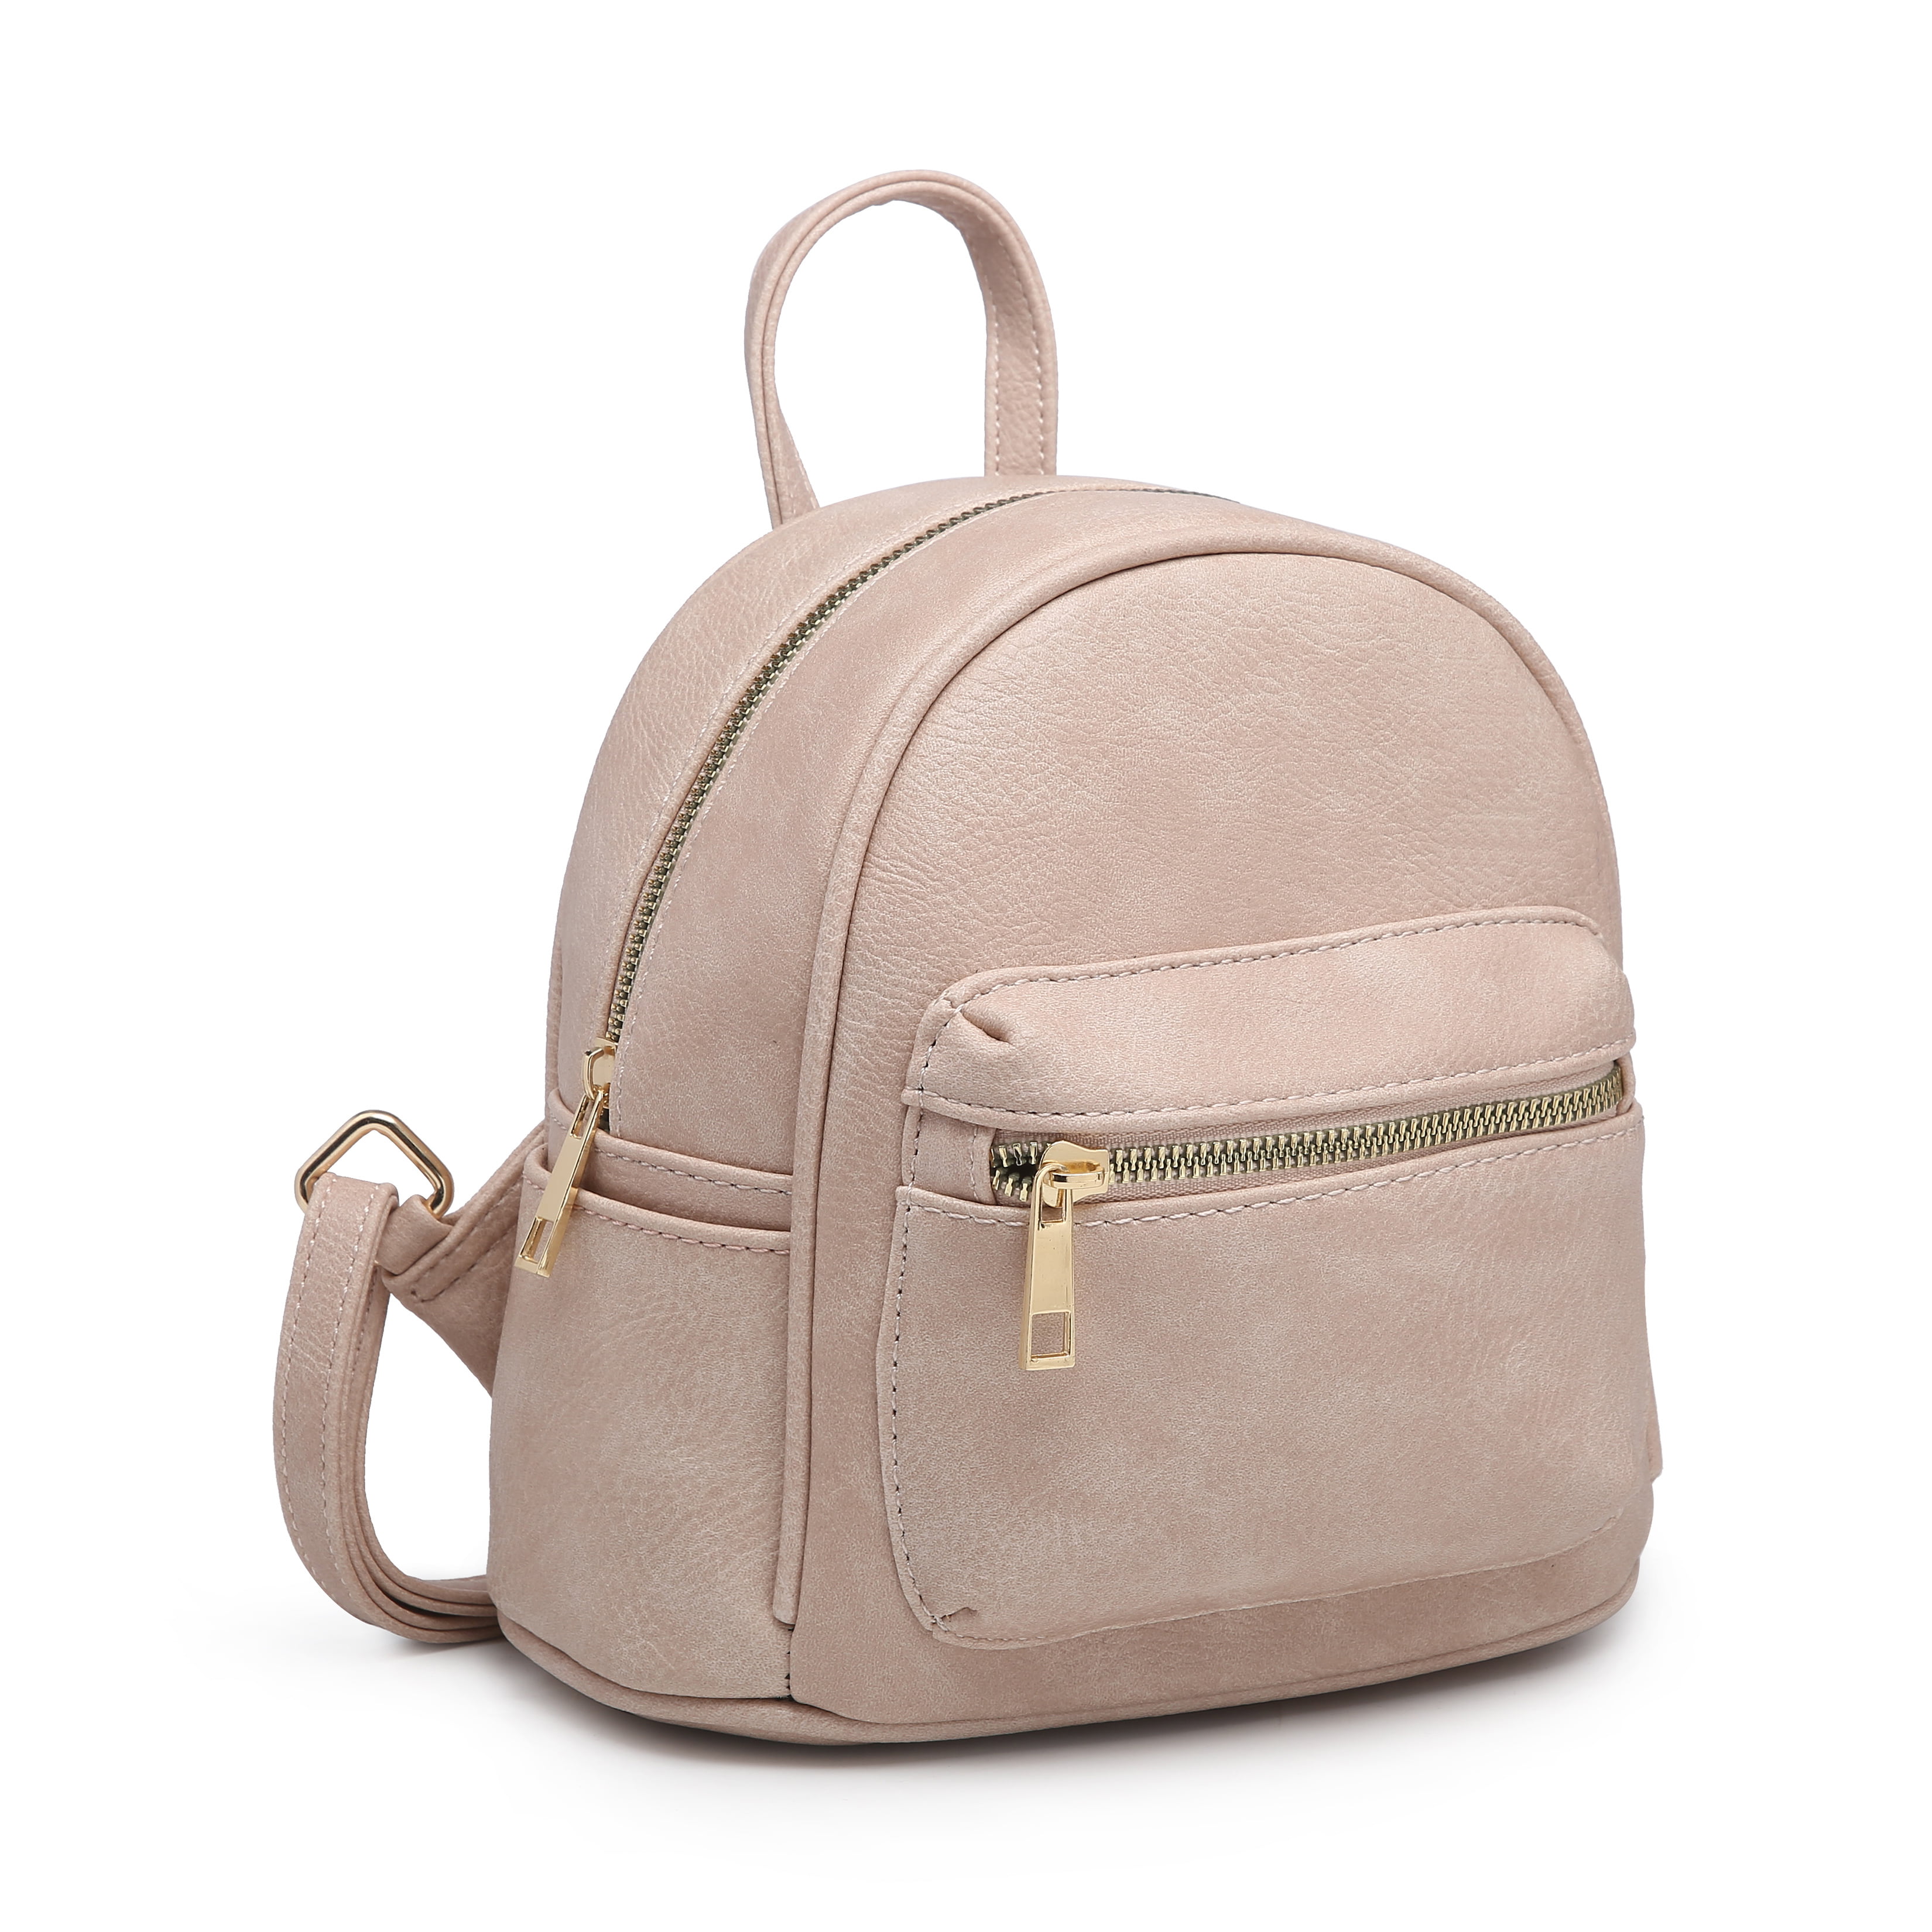 Womens New Fashion Causal Backpack Travel Handbag Mini School Bags Daypack for Girls Black